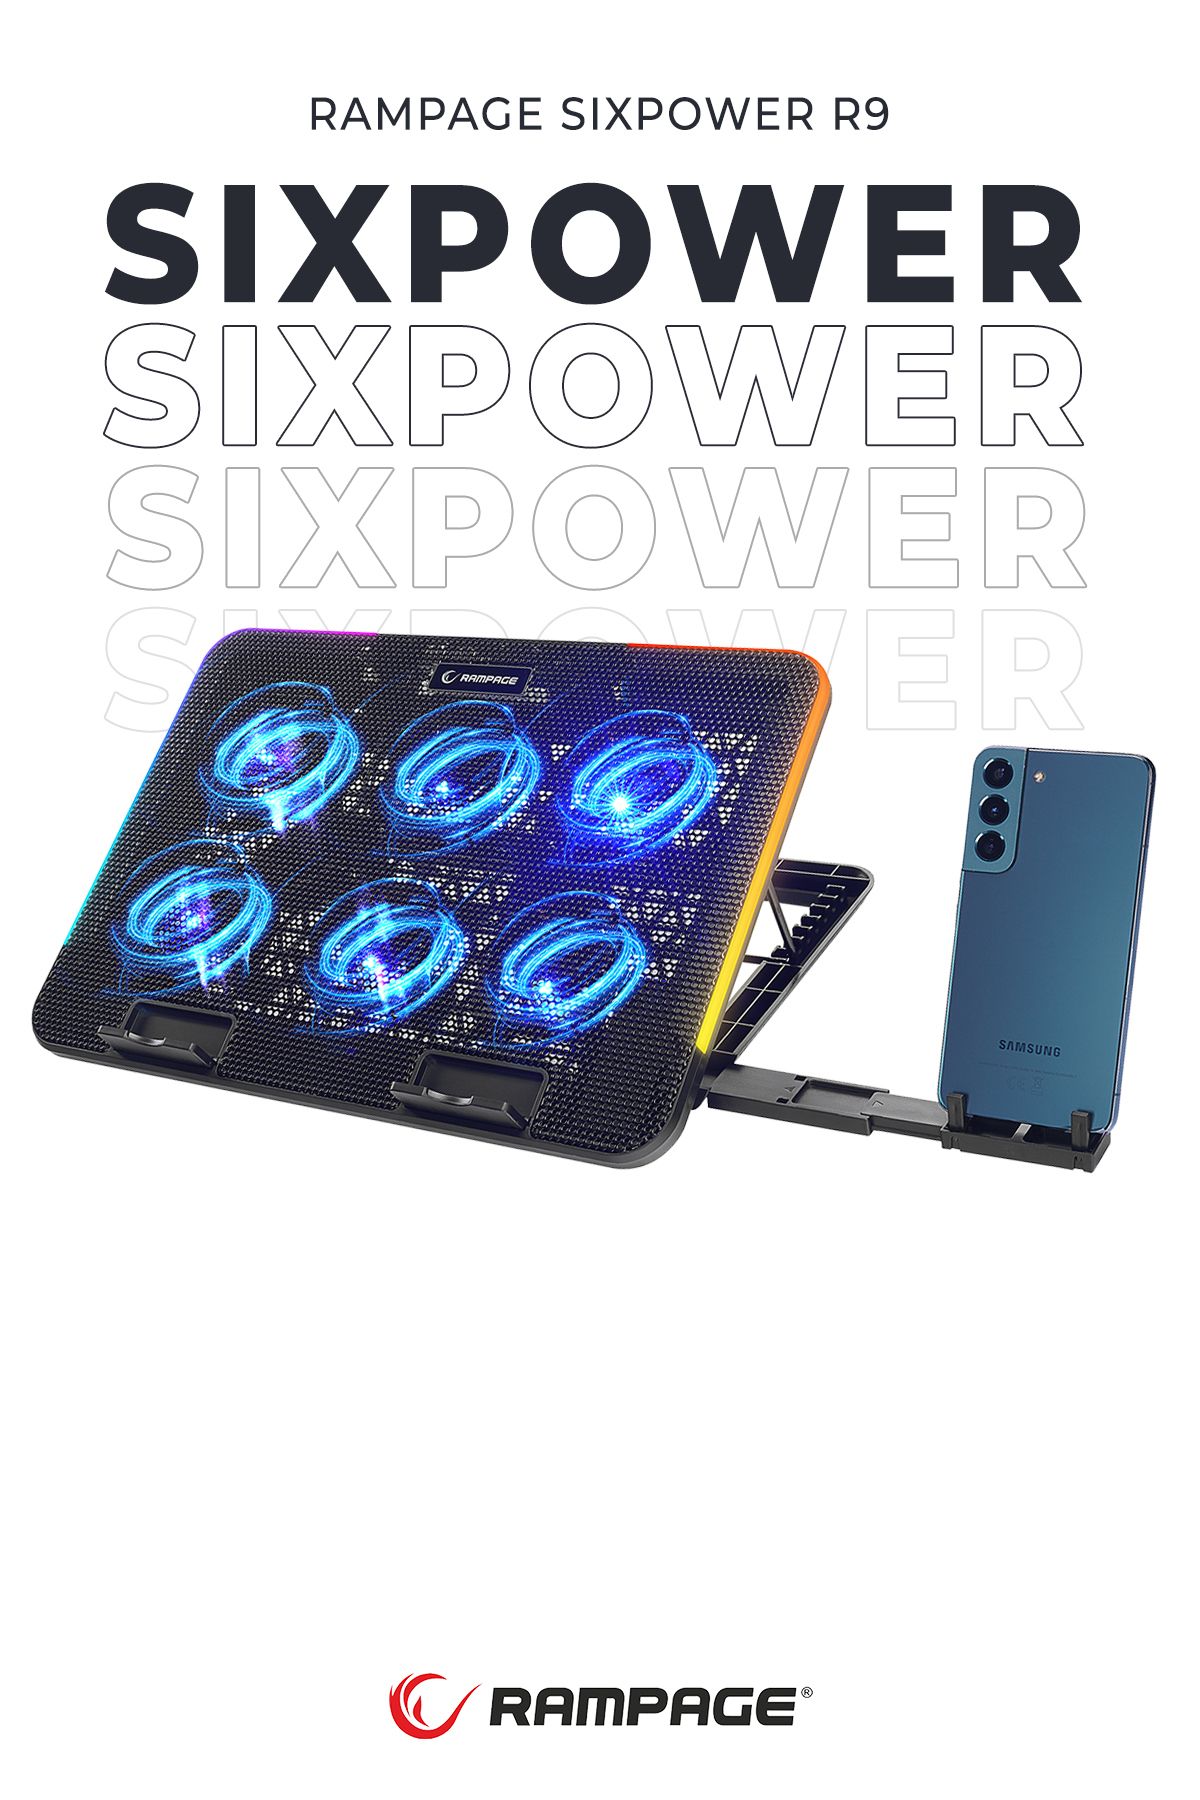 Rampage SIXPOWER R9 6 Fan RGB Işıklı Telefon Uyumlu Tutuculu Usb Çoklayıcı Notebook Soğutucu Stand